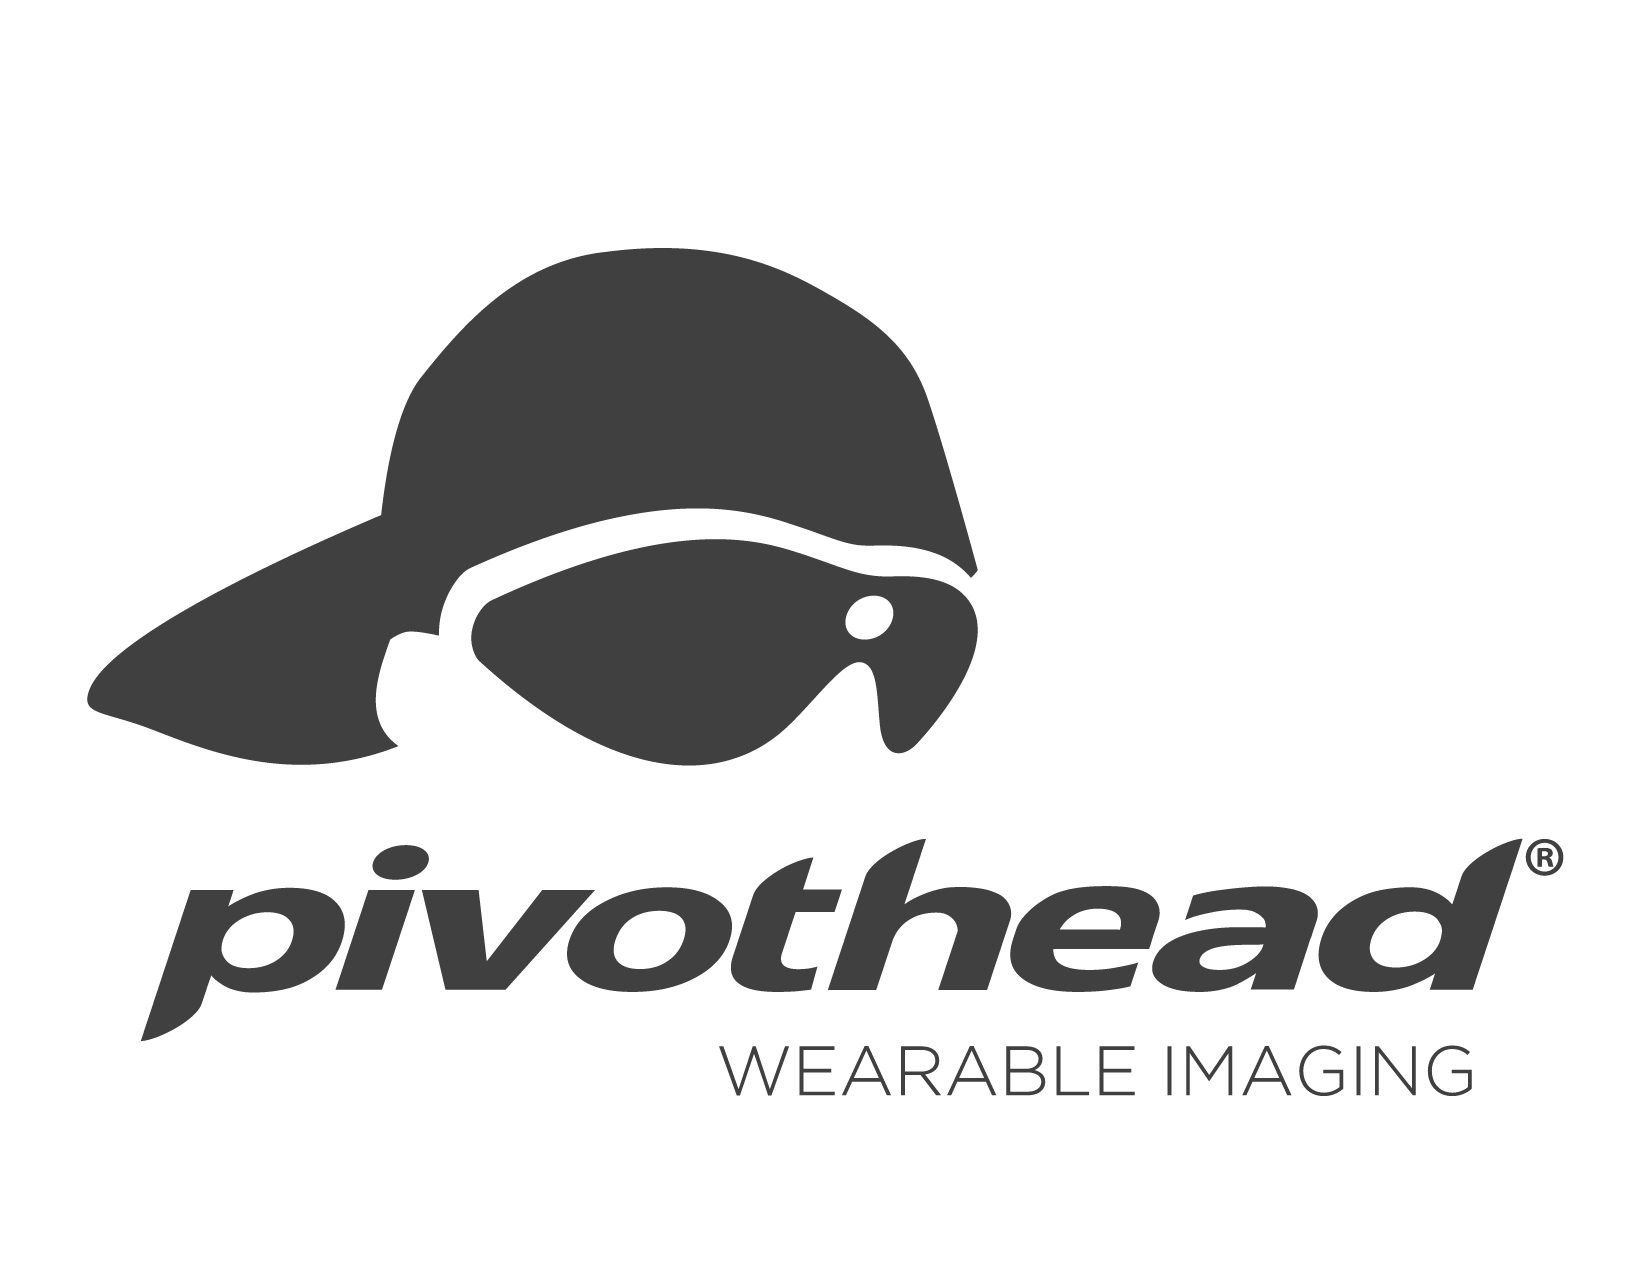 Pivothead